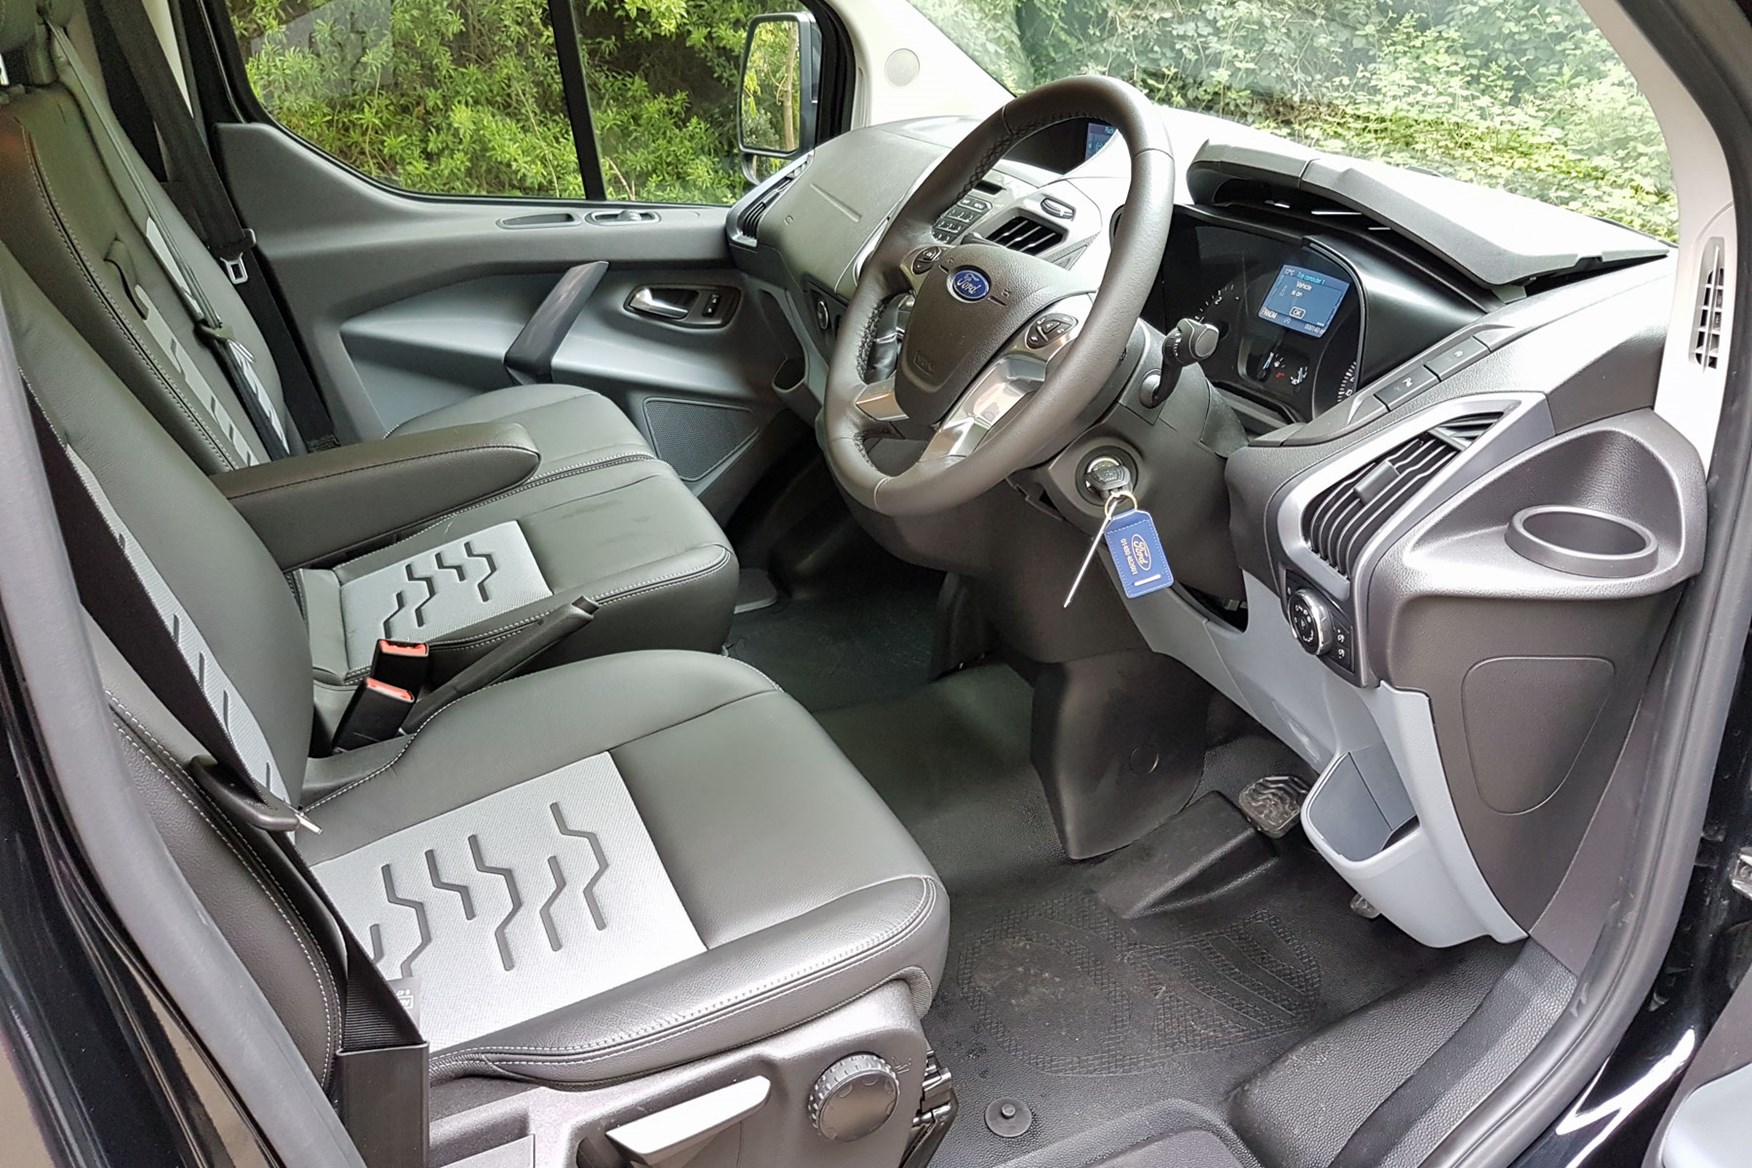 Ford Transit Custom Sport automatic cab interior